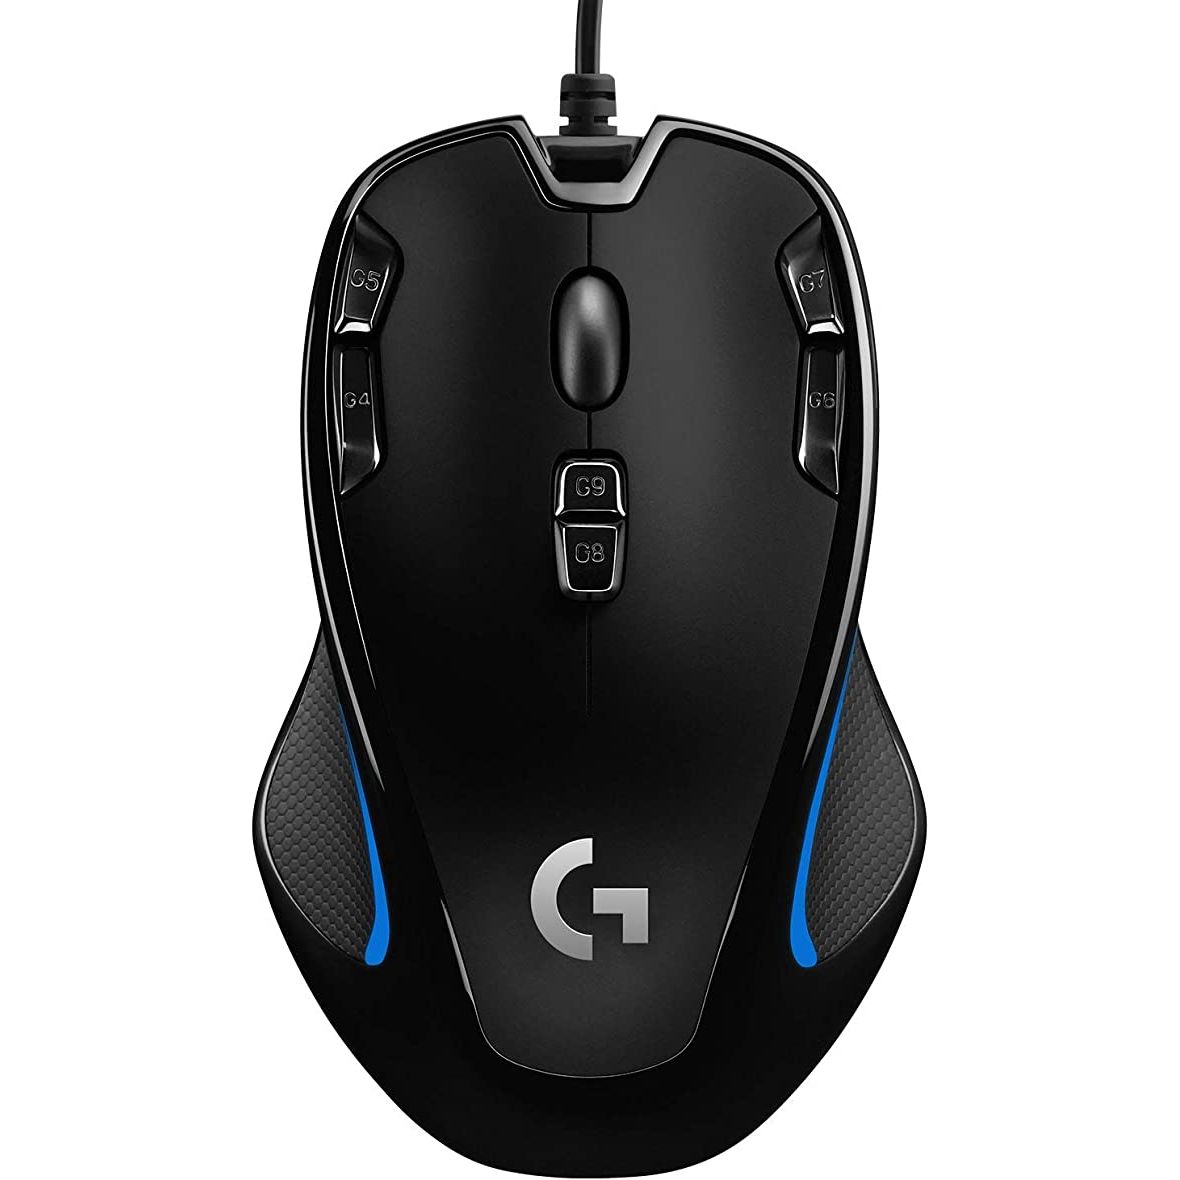 LOGITECH Optical Gaming Mouse G300s - Vertexhub Shop